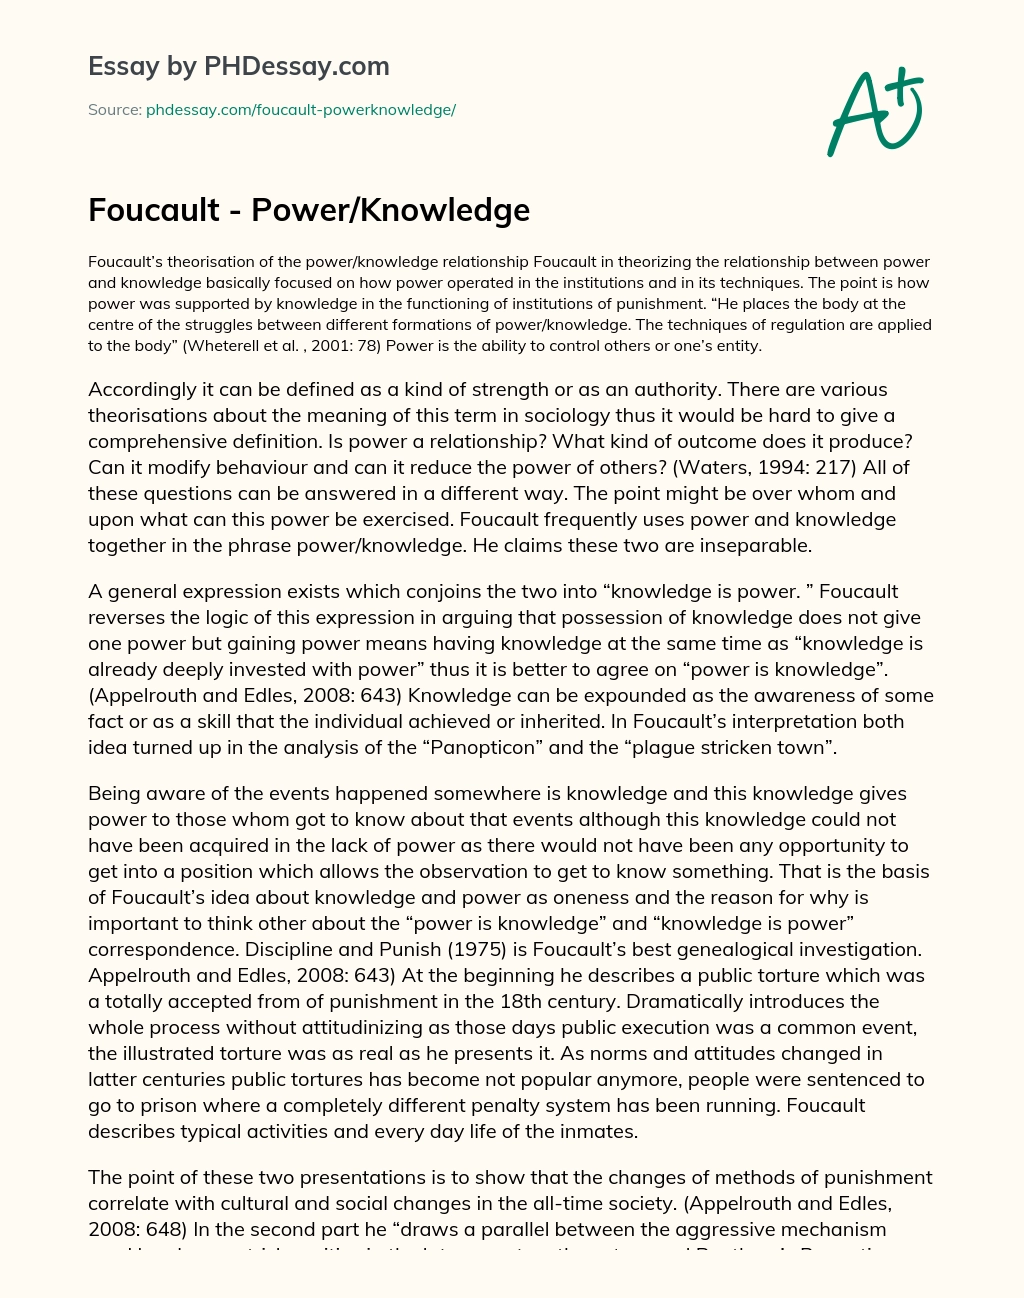 Foucault – Power/Knowledge essay